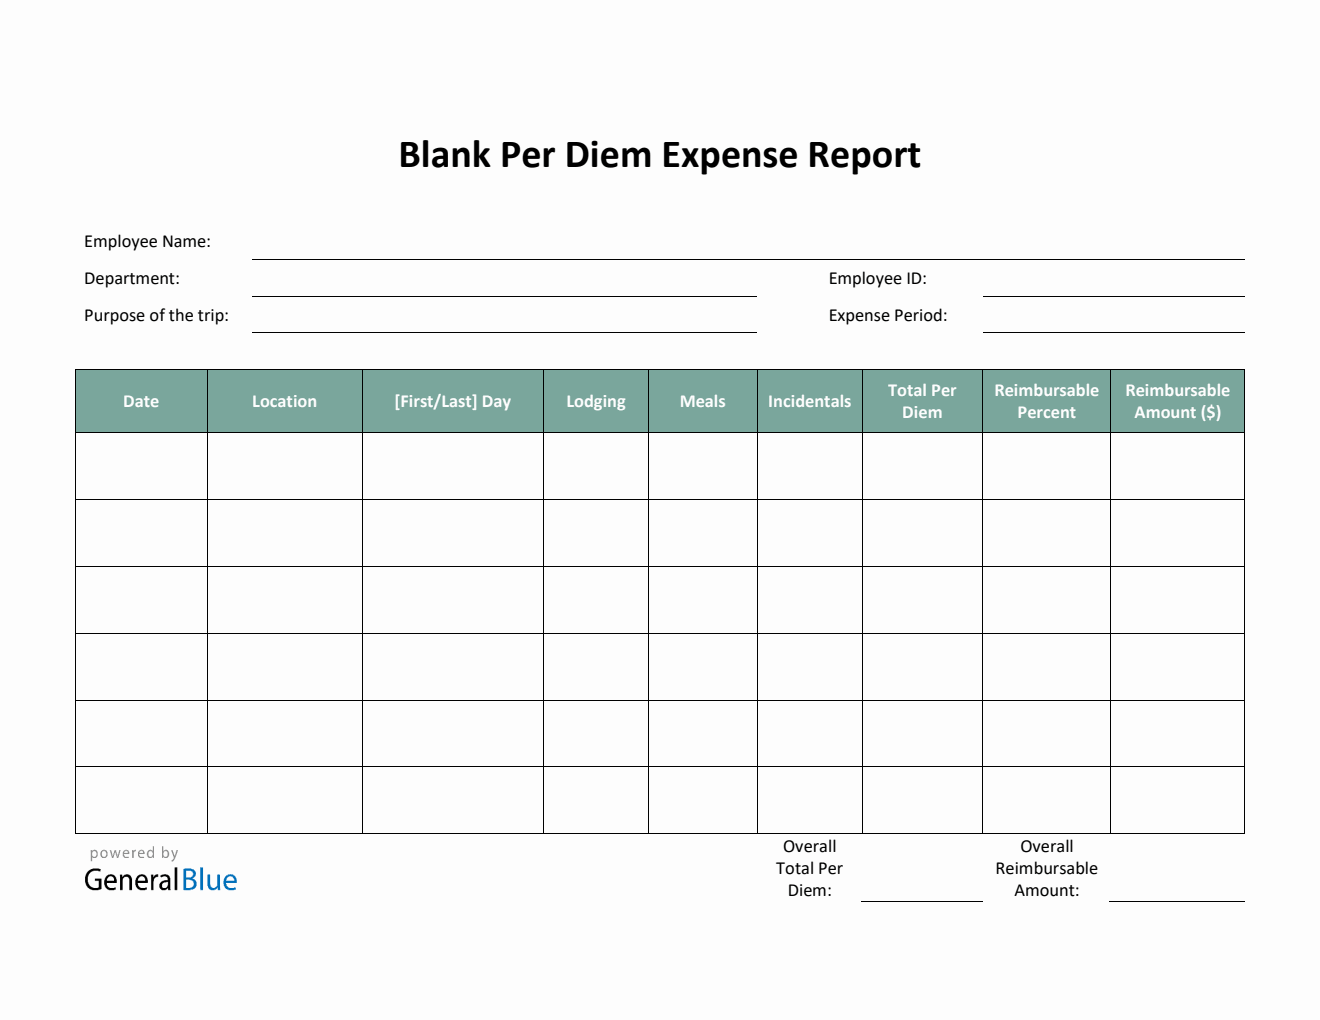 Blank Per Diem Expense Report Template in Word (Green)